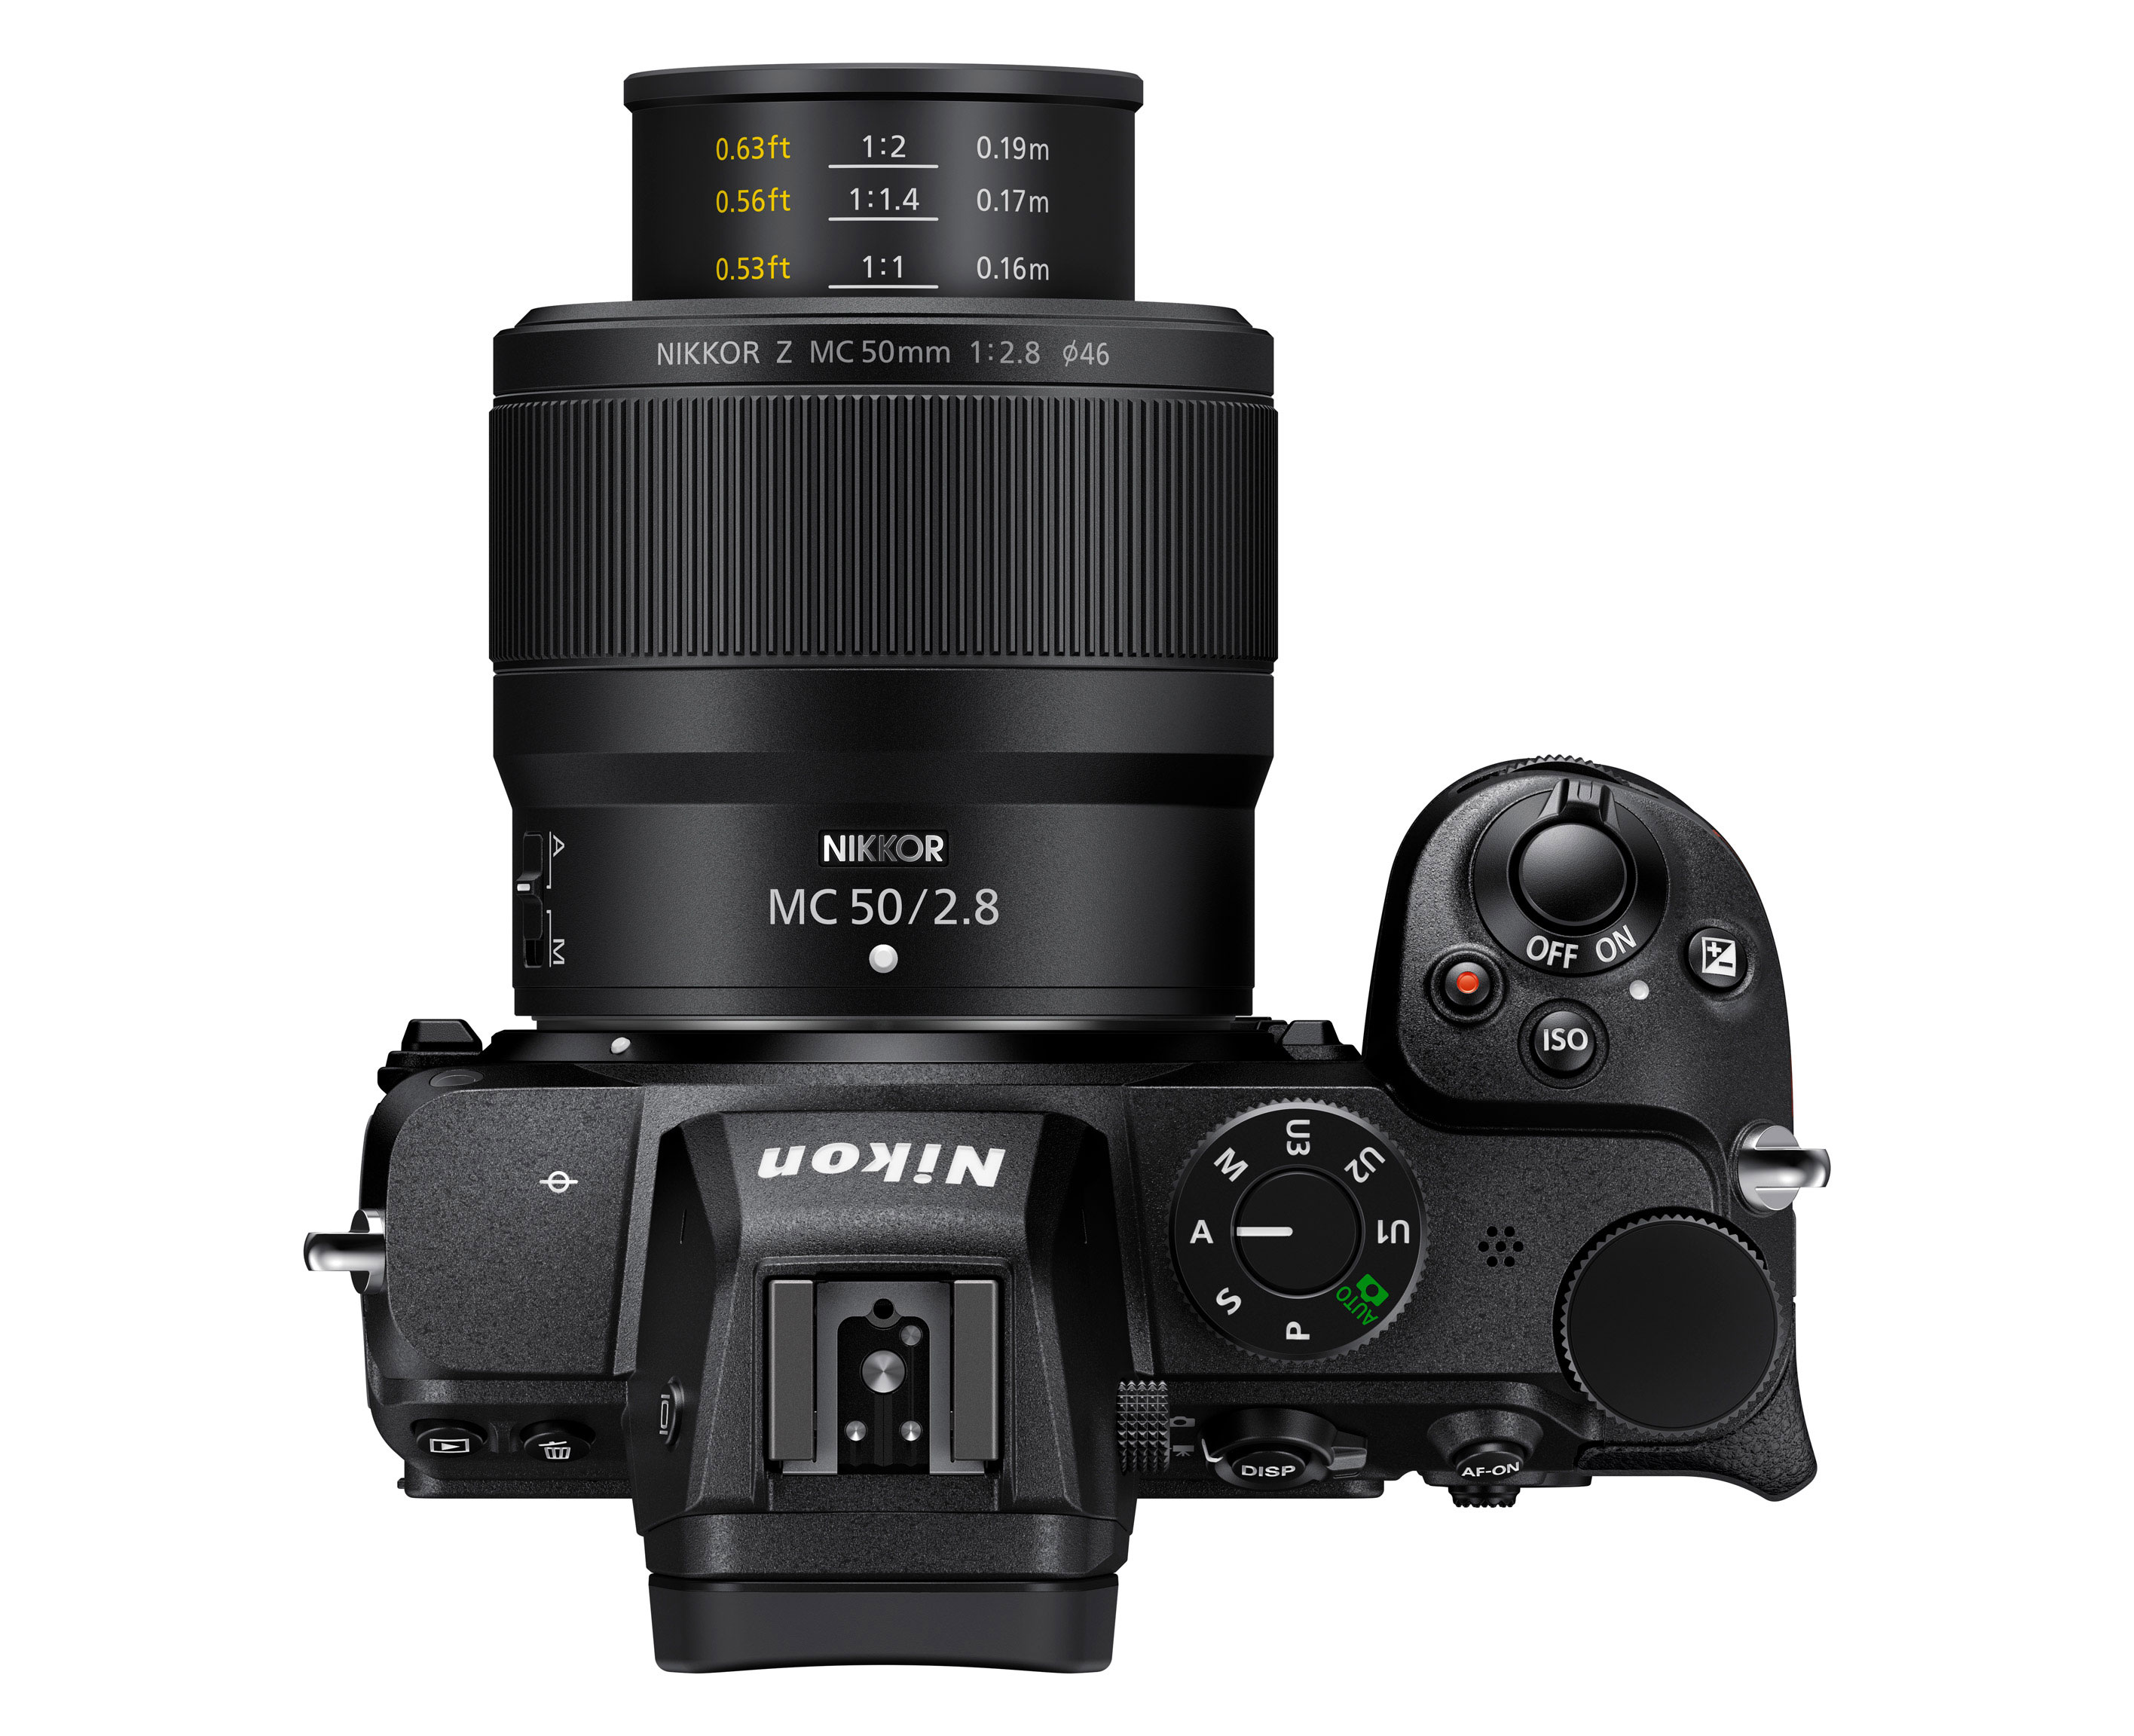 Nikon Z MC 50mm f/2.8